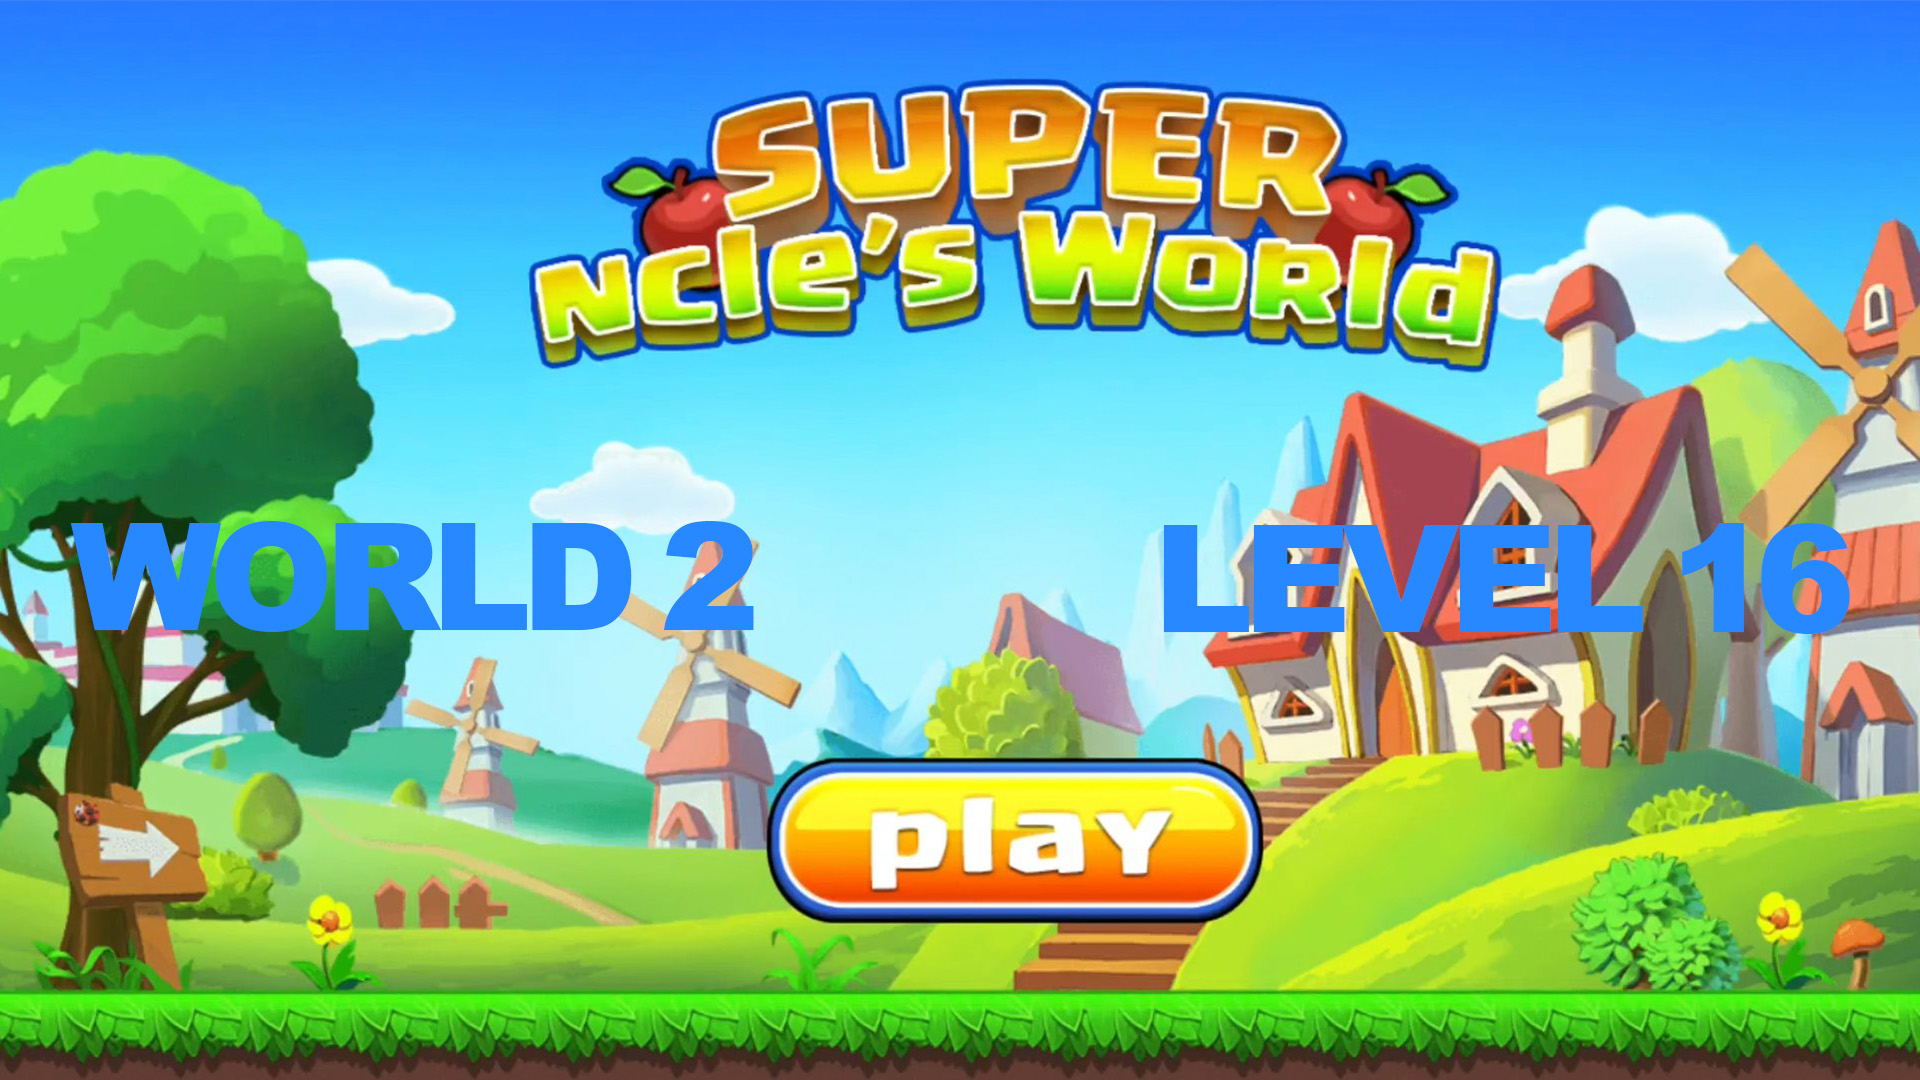 Super ncle's  World 2. level 16.